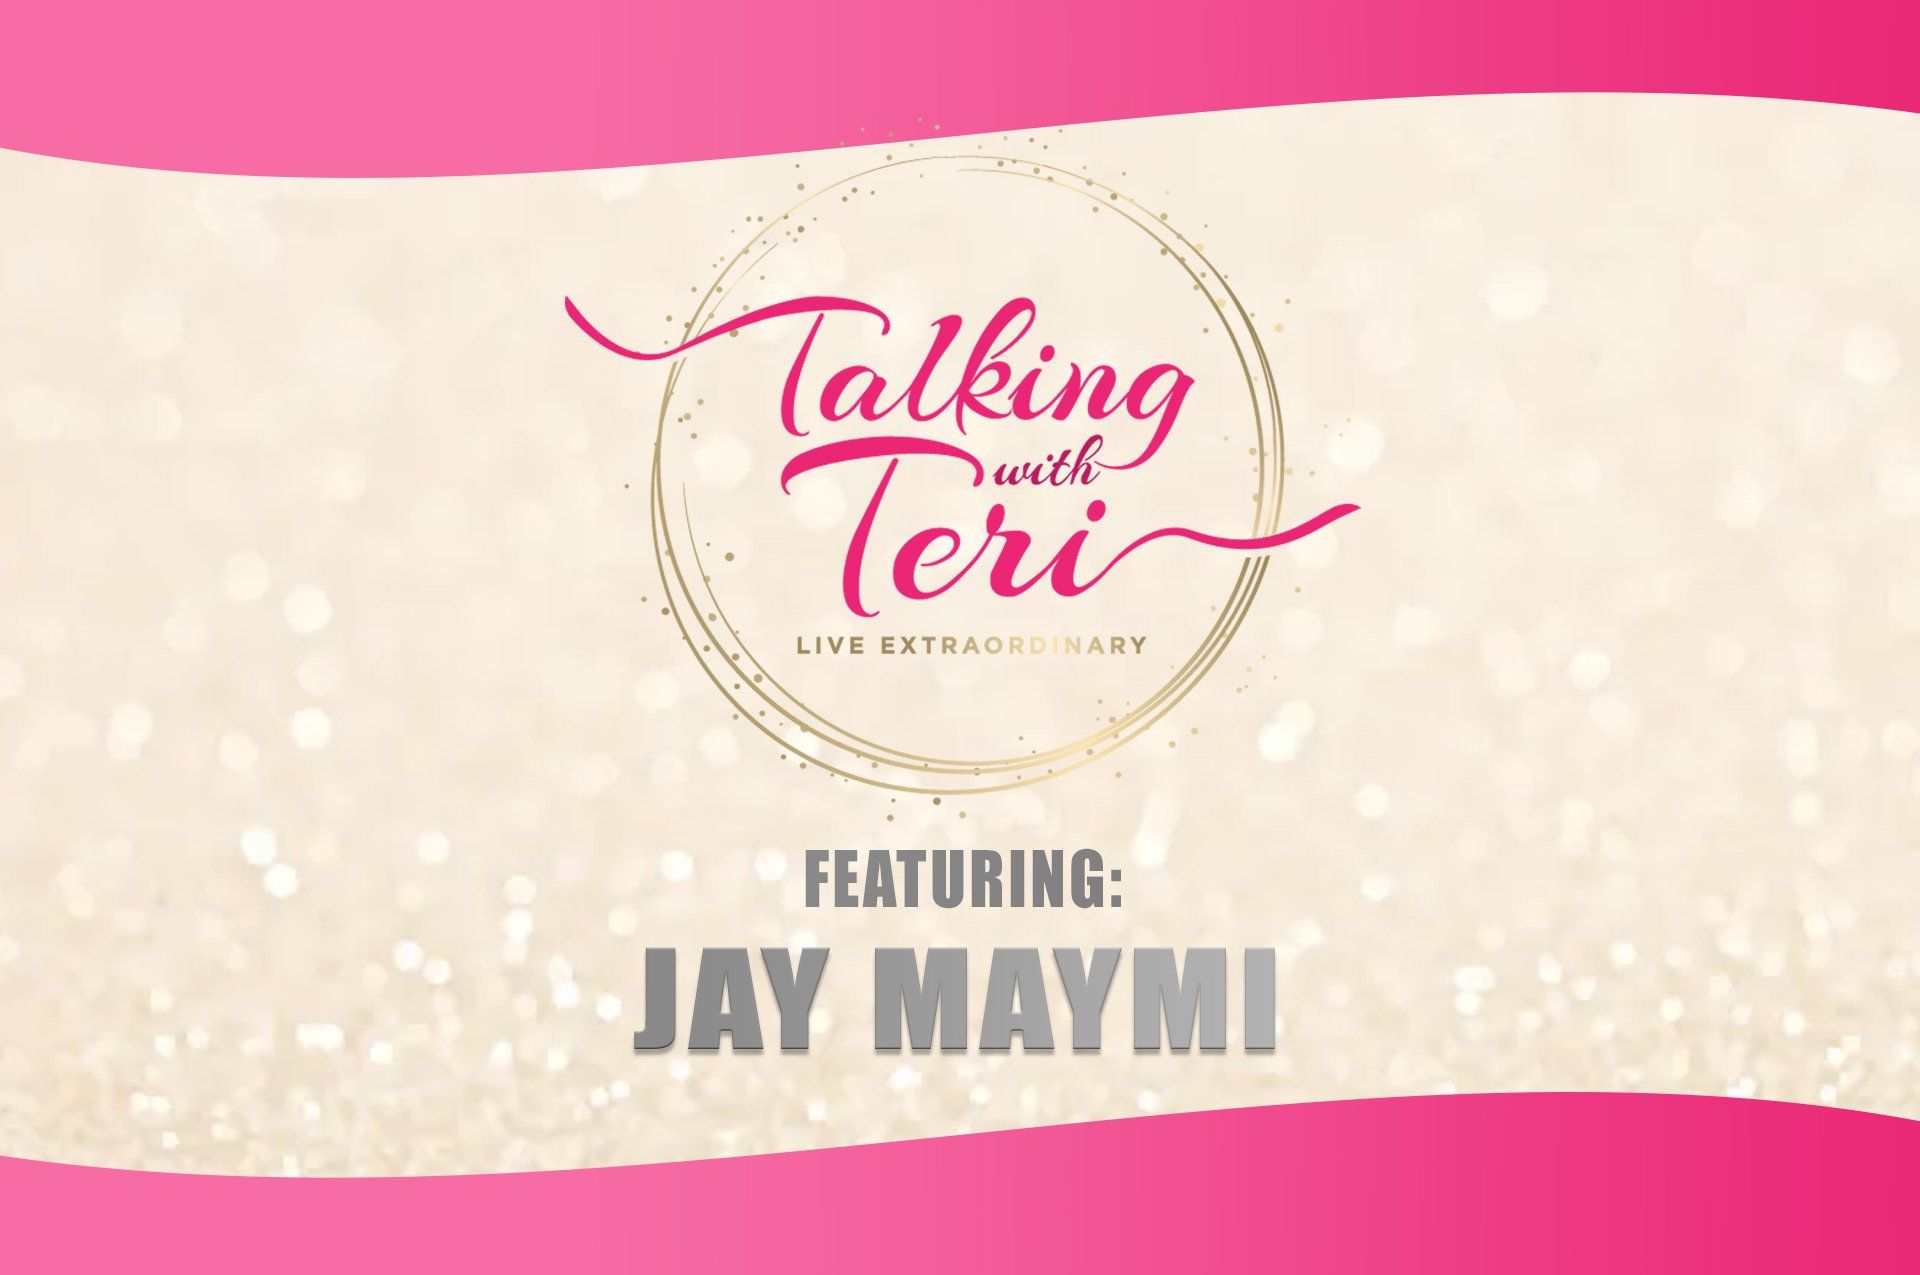 Talking With Teri and Jay Maymi